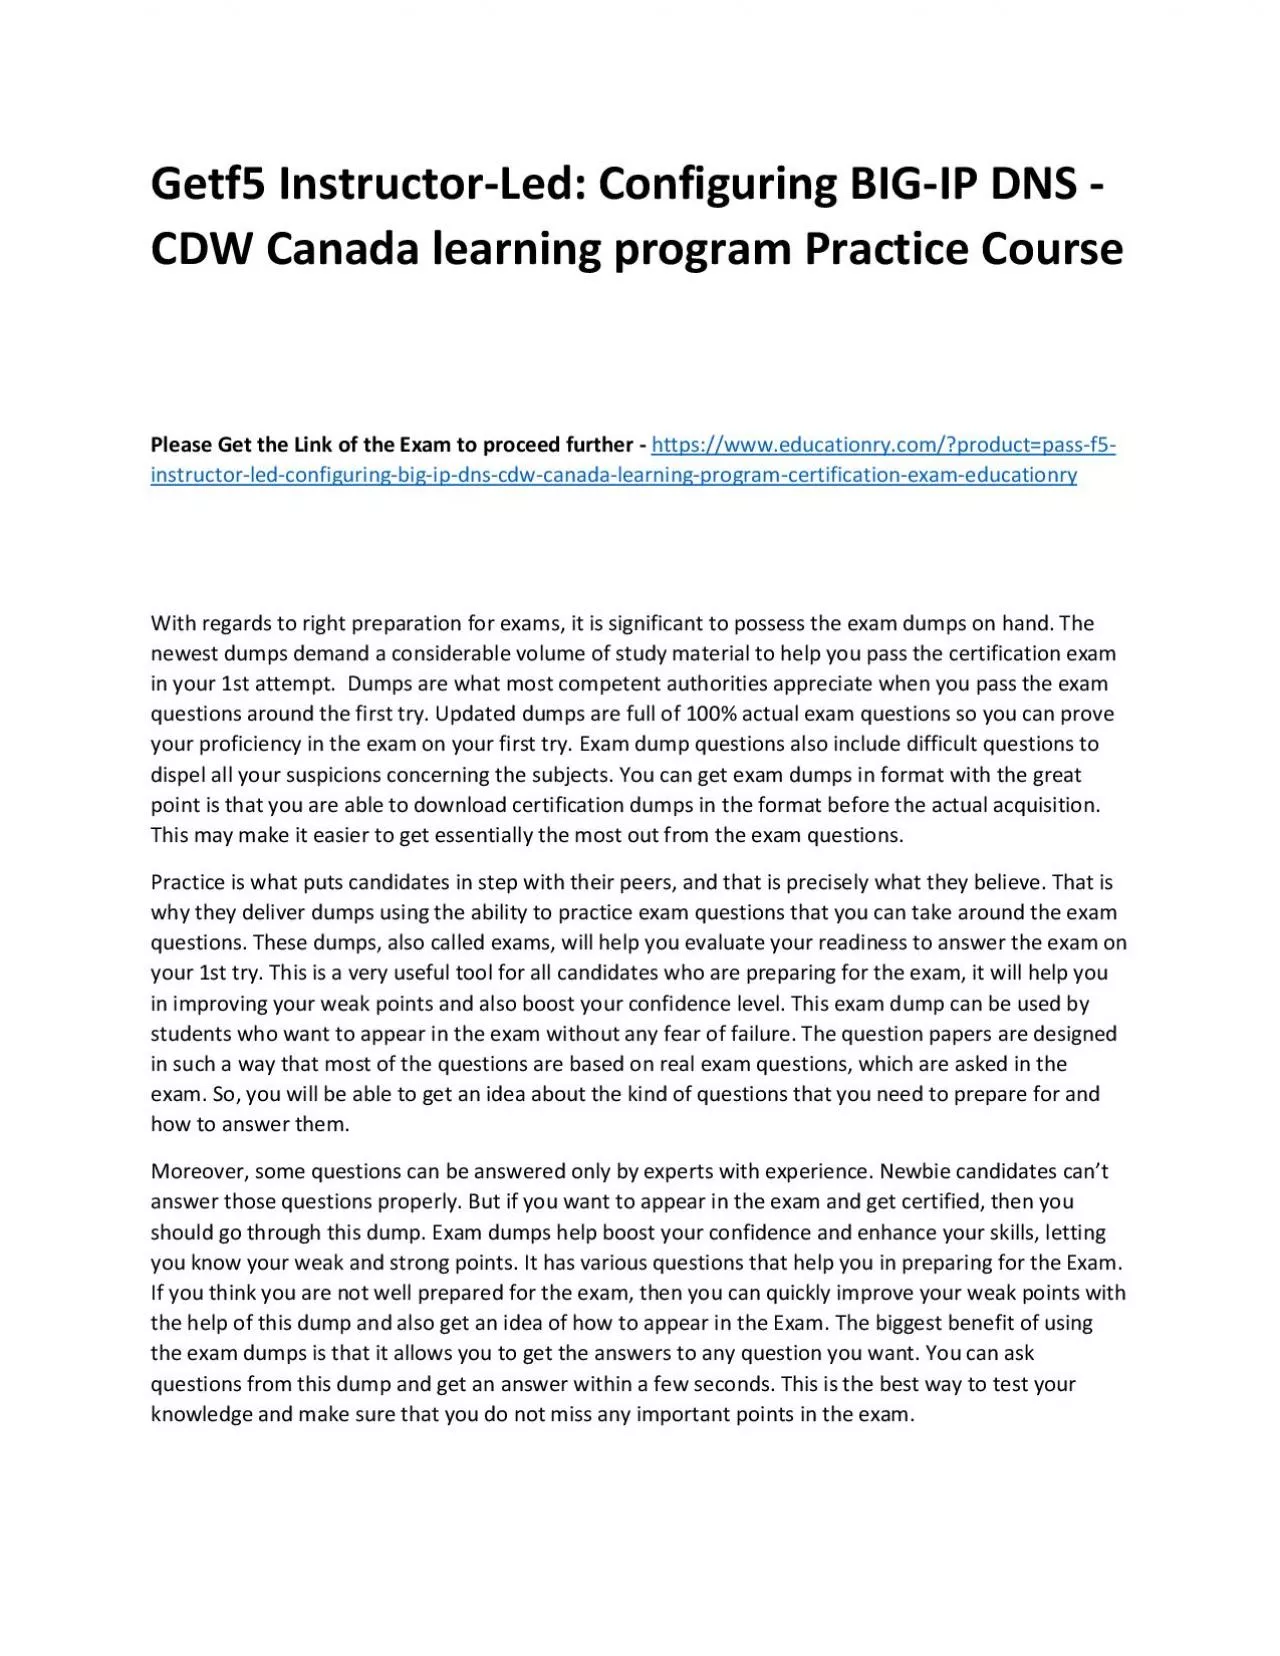 f5 Instructor-Led: Configuring BIG-IP DNS - CDW Canada learning program